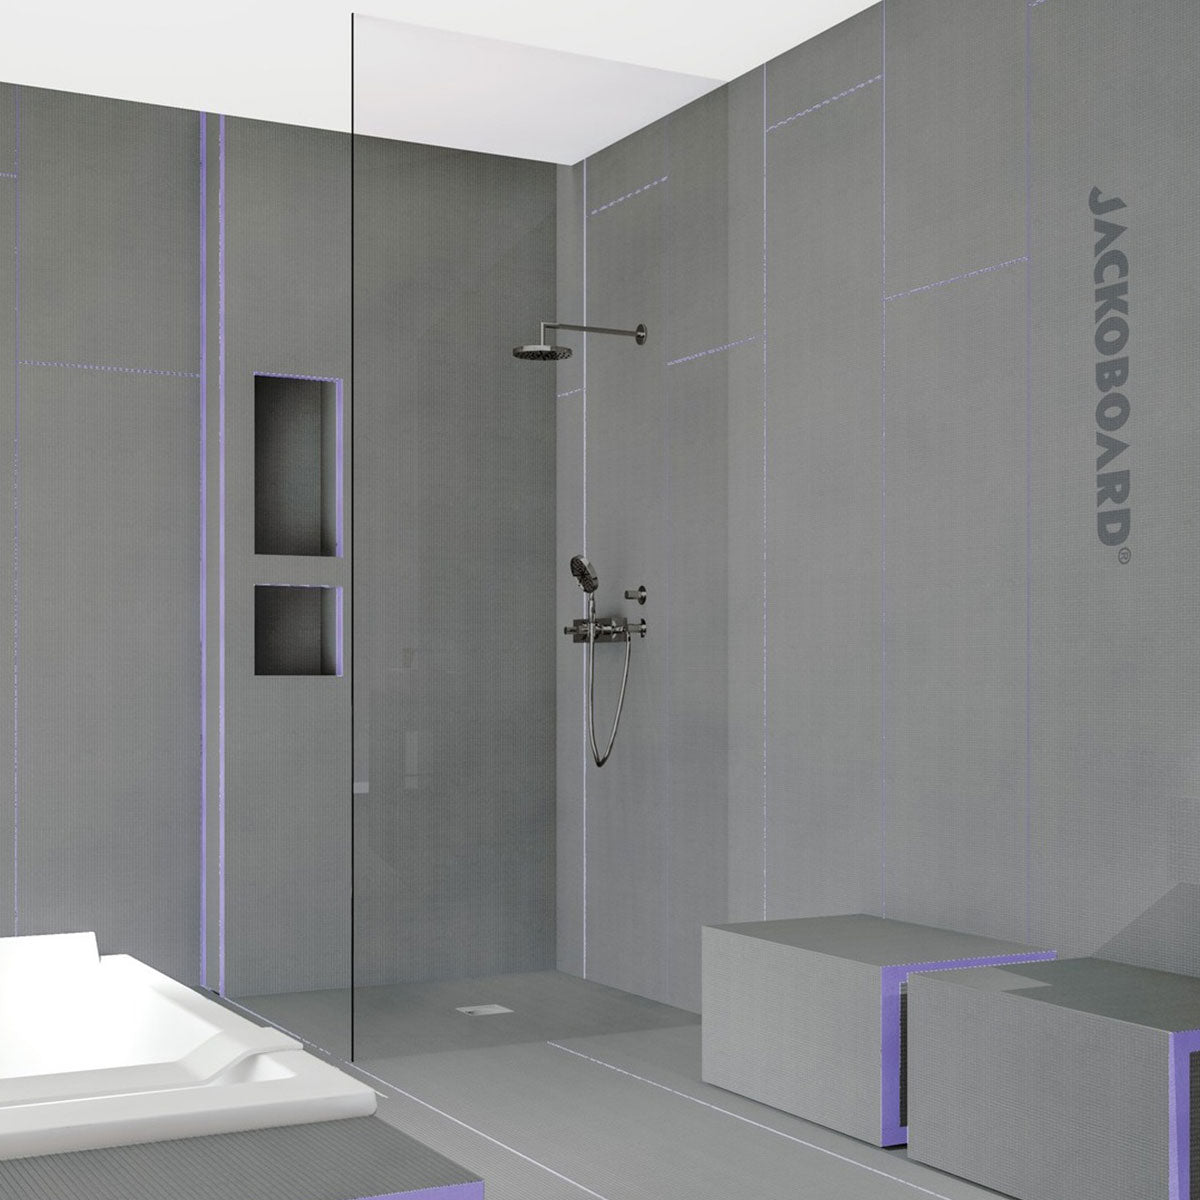 Jackoboard Aqua Flat Wet Room Shower Tray & Drain: 800 x 800 x 20mm